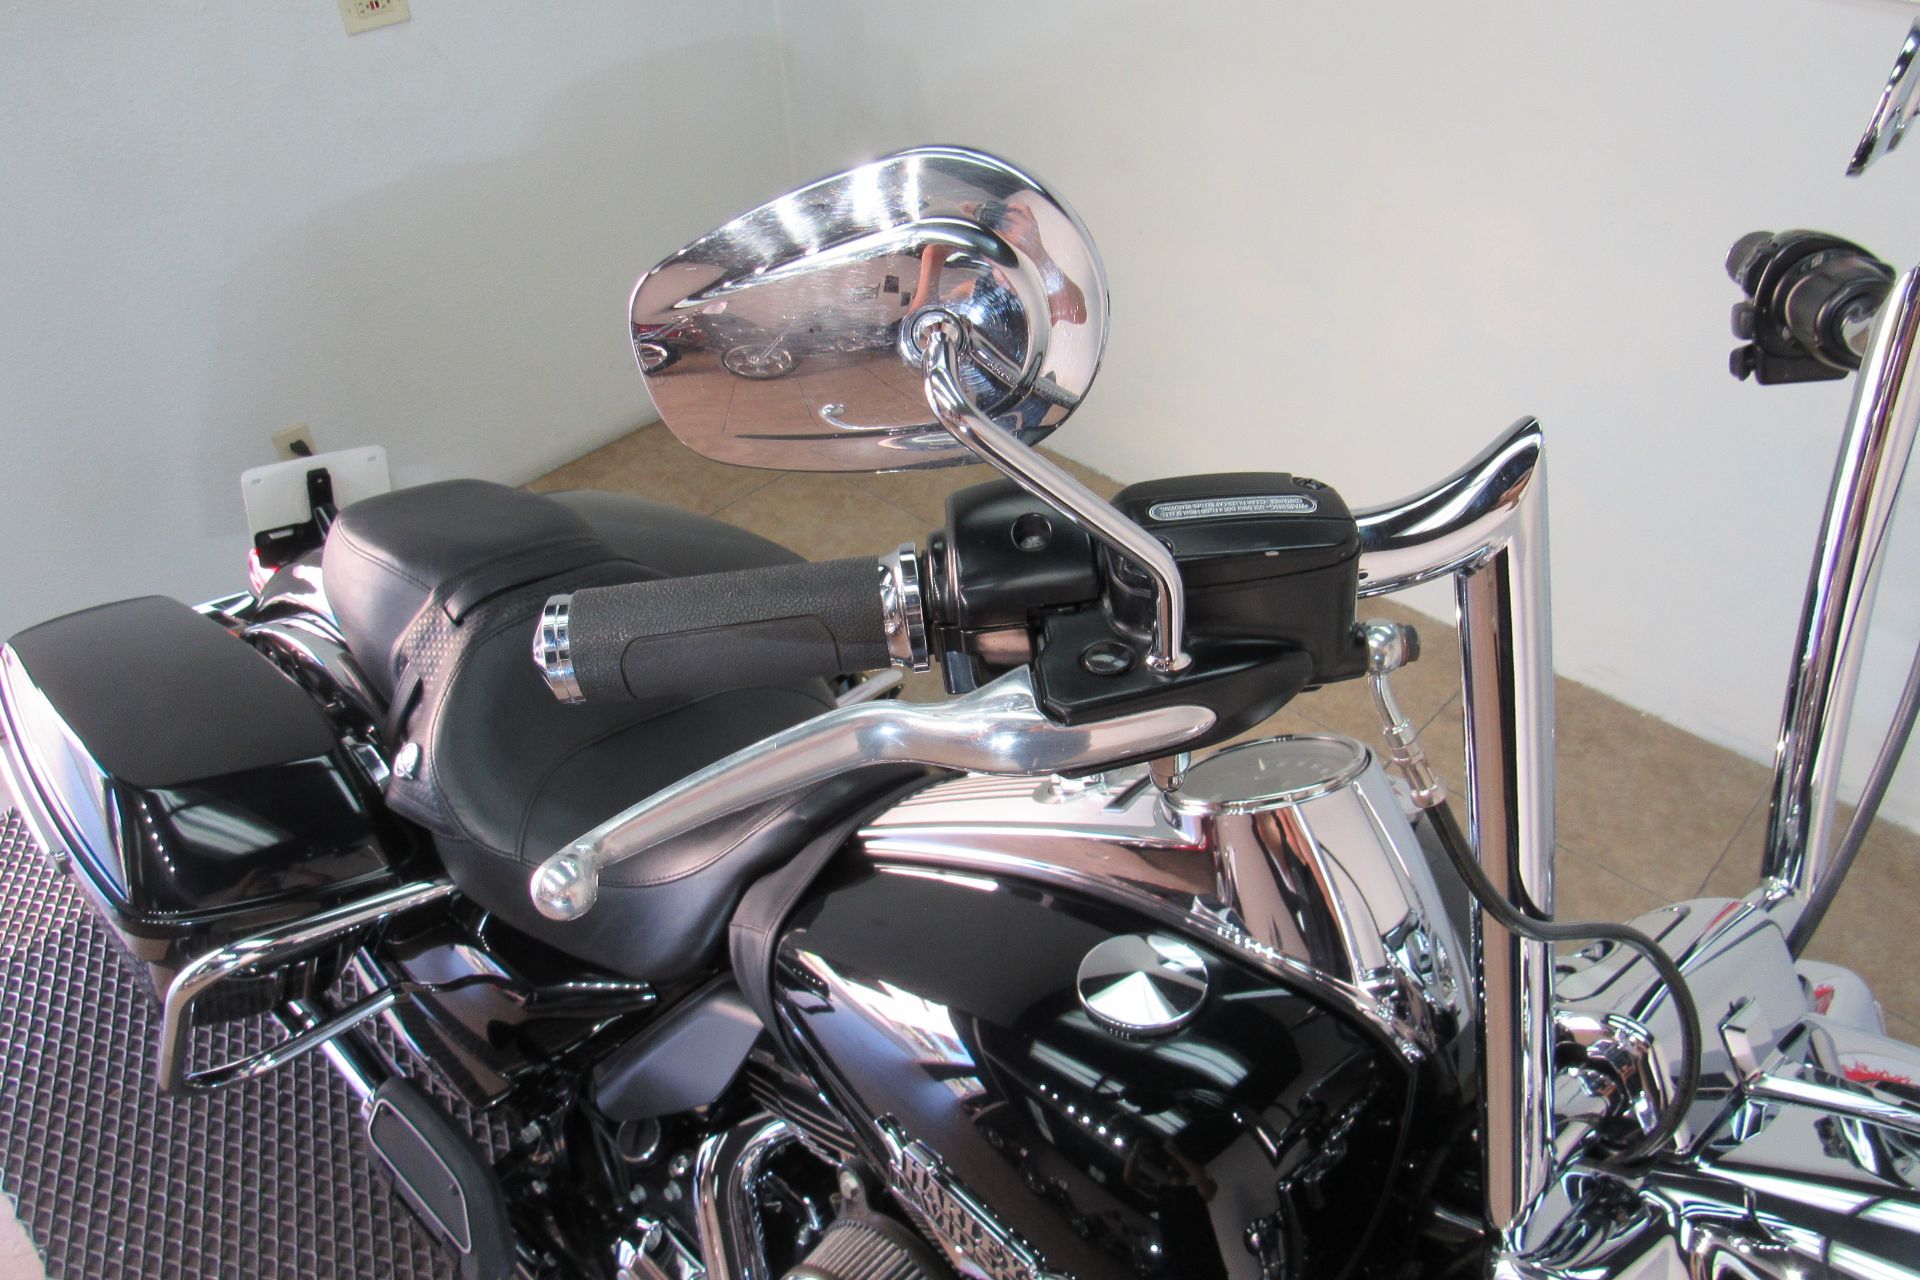 2012 Harley-Davidson Road King® Classic in Temecula, California - Photo 23